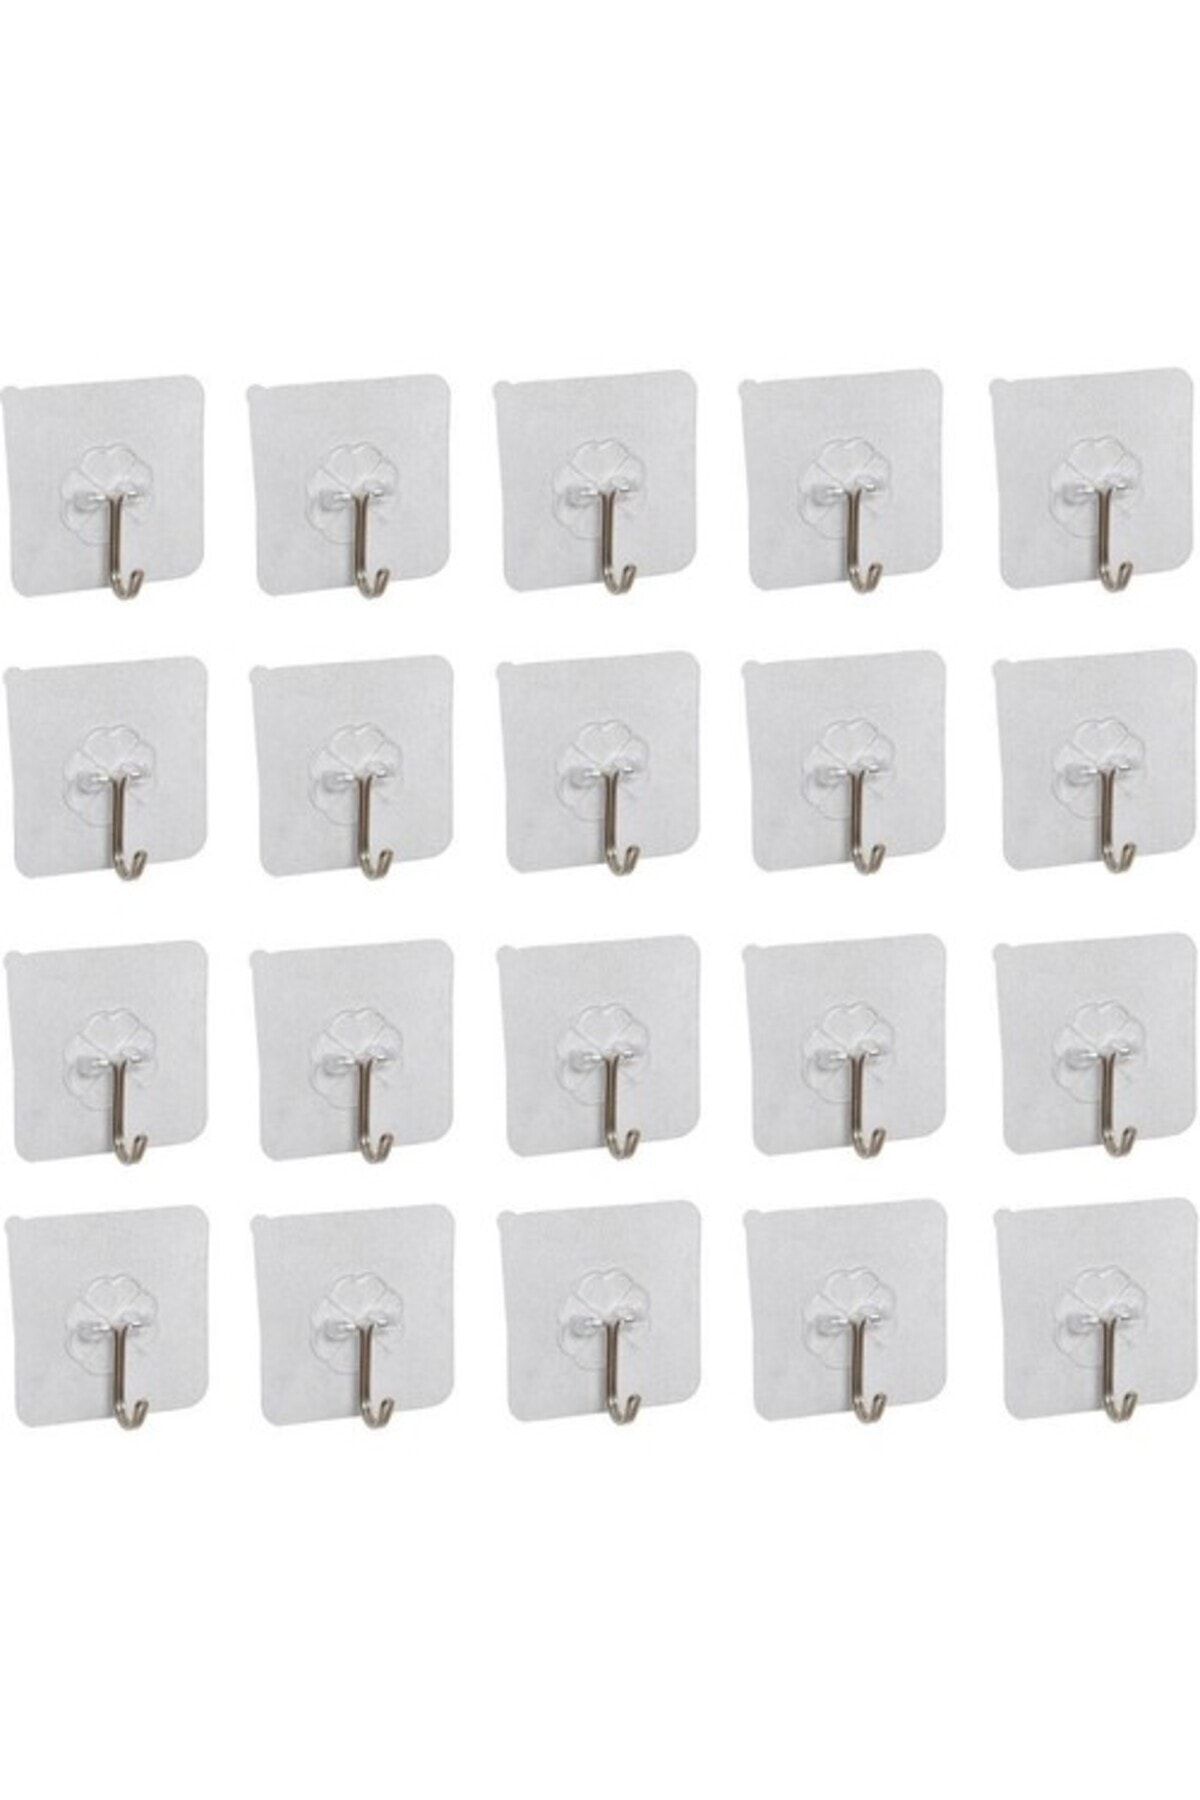 Berev 20 Self-Adhesive Transparent Hangers with Metal Hooks